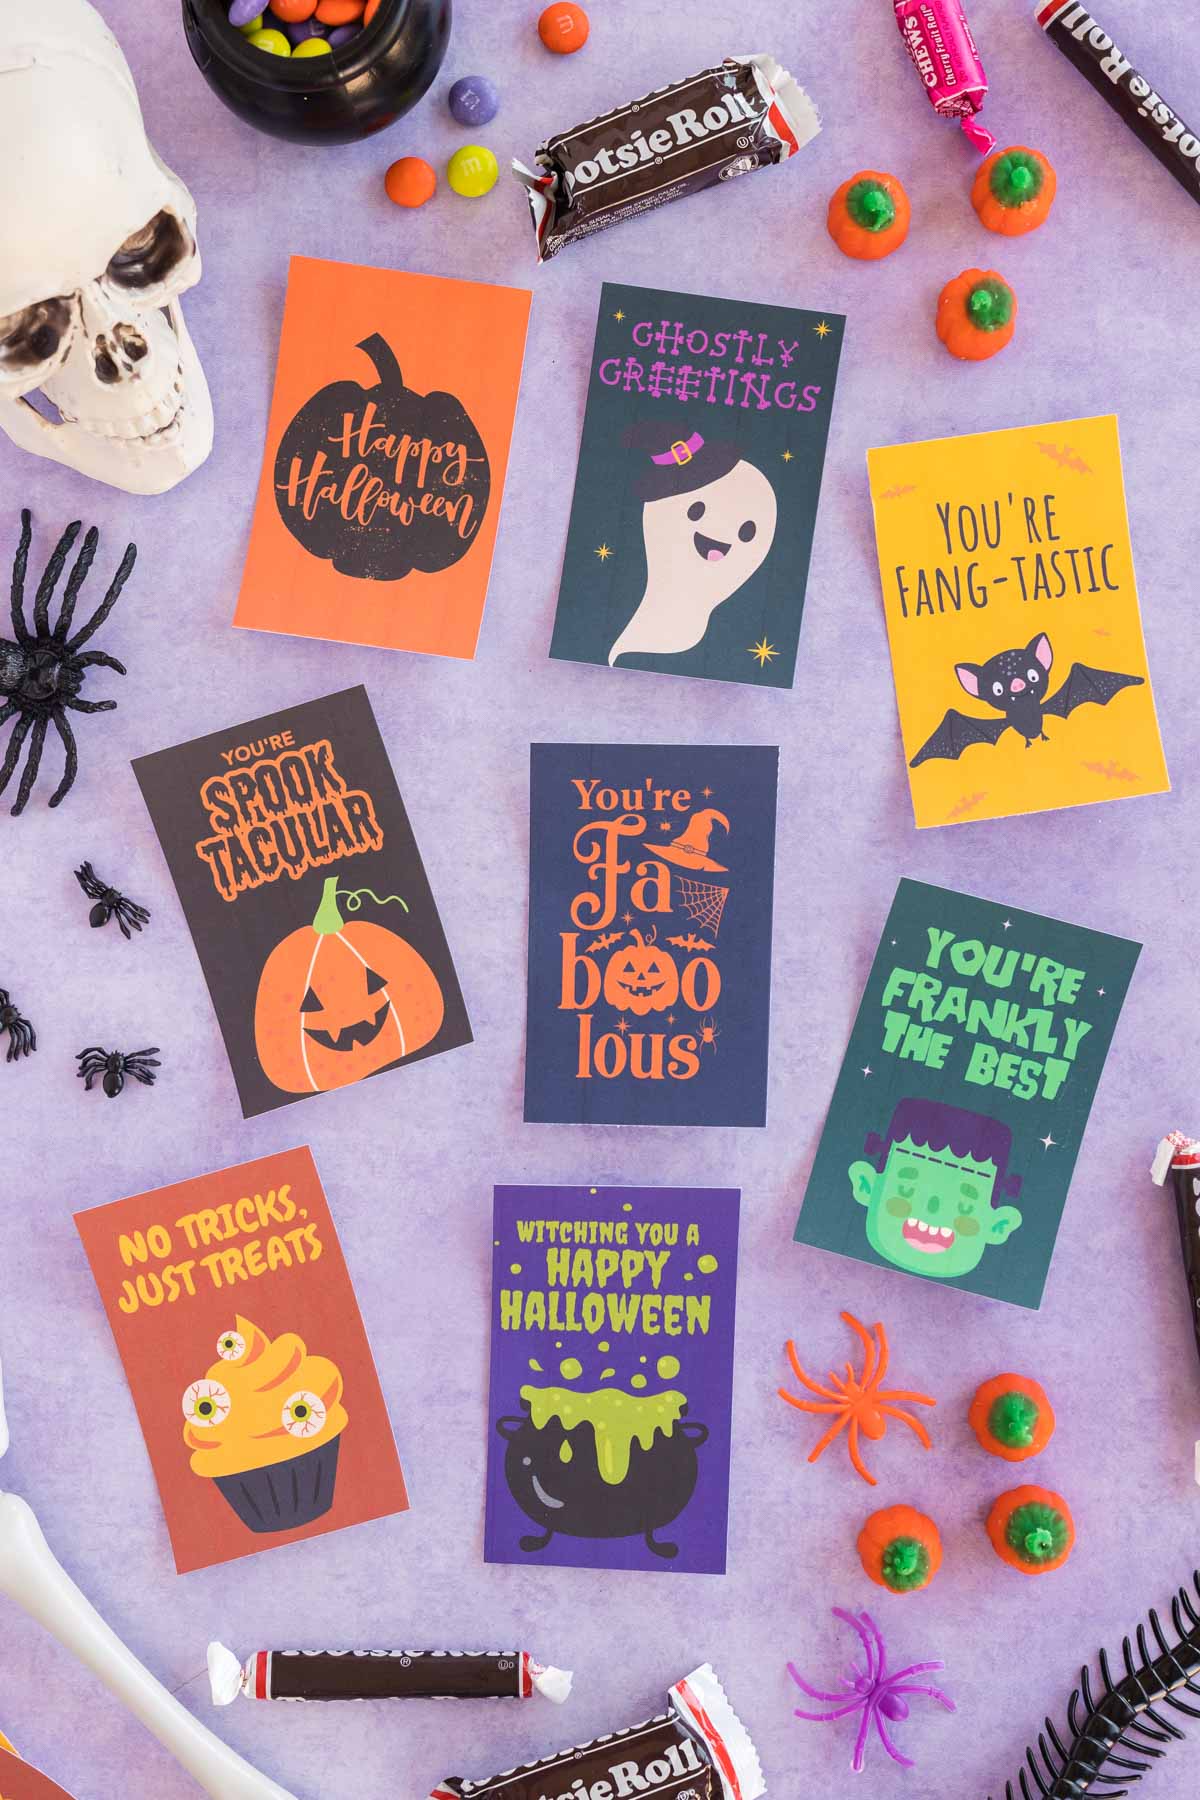 Free printable Hallowene gift tags on a purple background